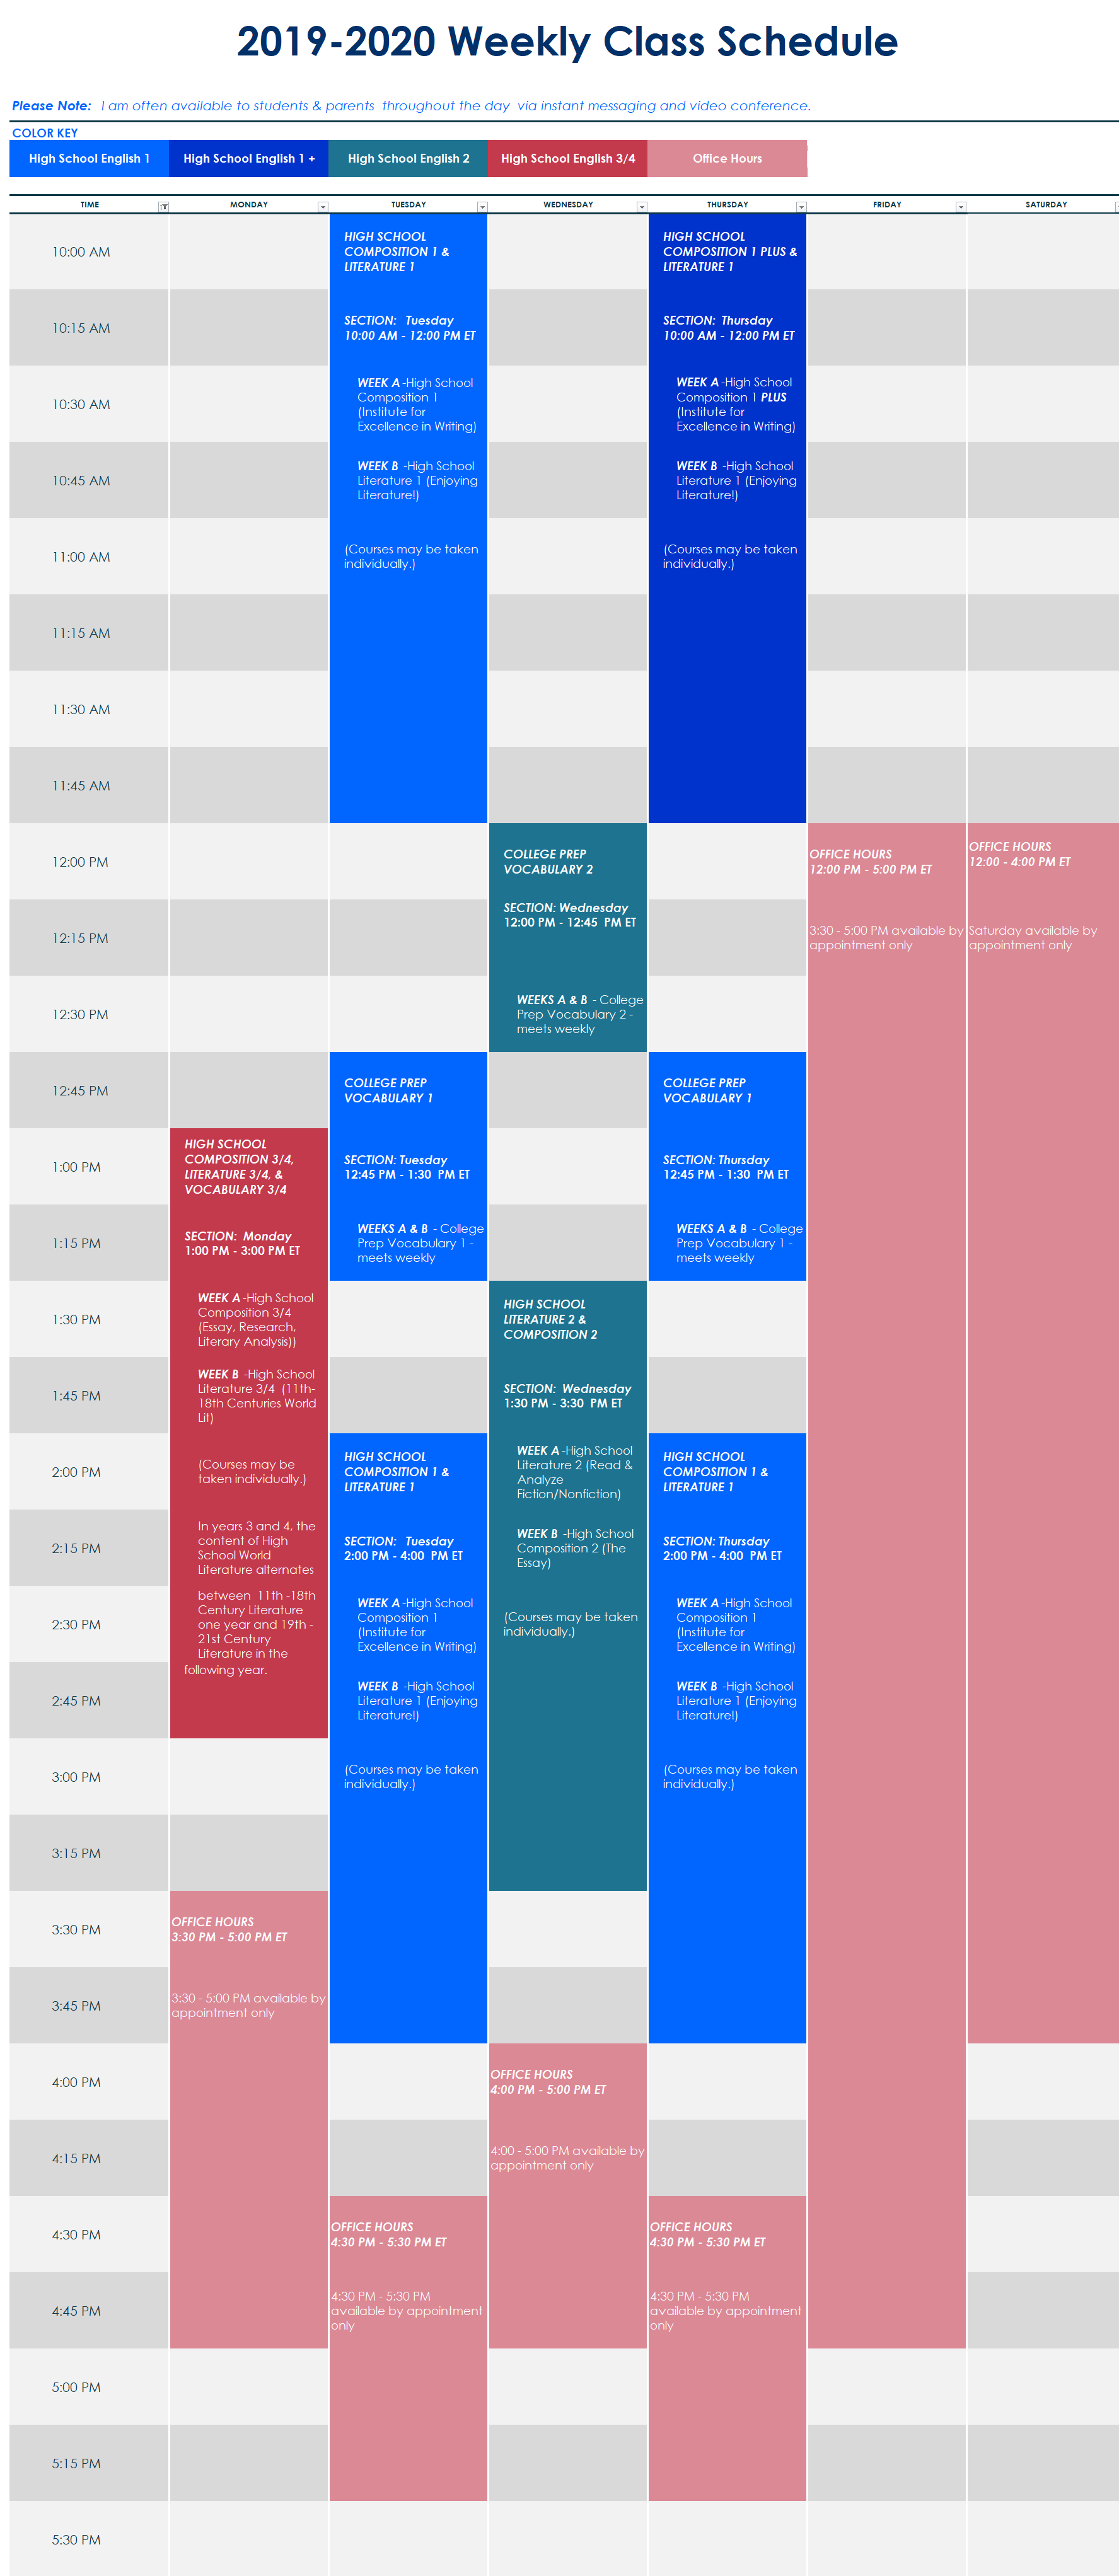 Weekly Class Schedule 2019-2020